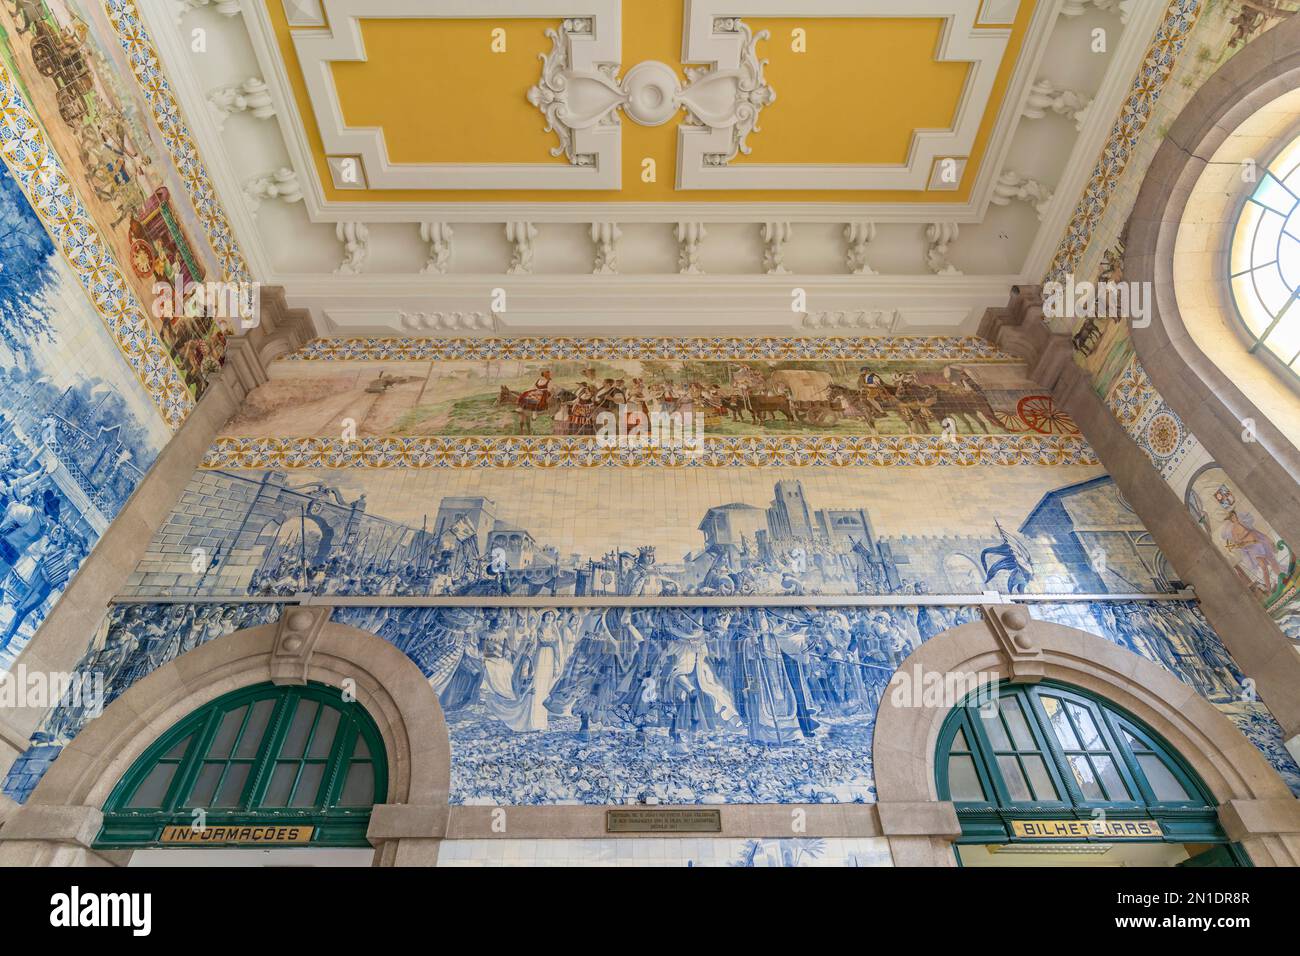 View of azulejos on walls of ornate interior of Arrivals Hall at Sao Bento Railway Station in Porto, Porto, Norte, Portugal, Europe Stock Photo